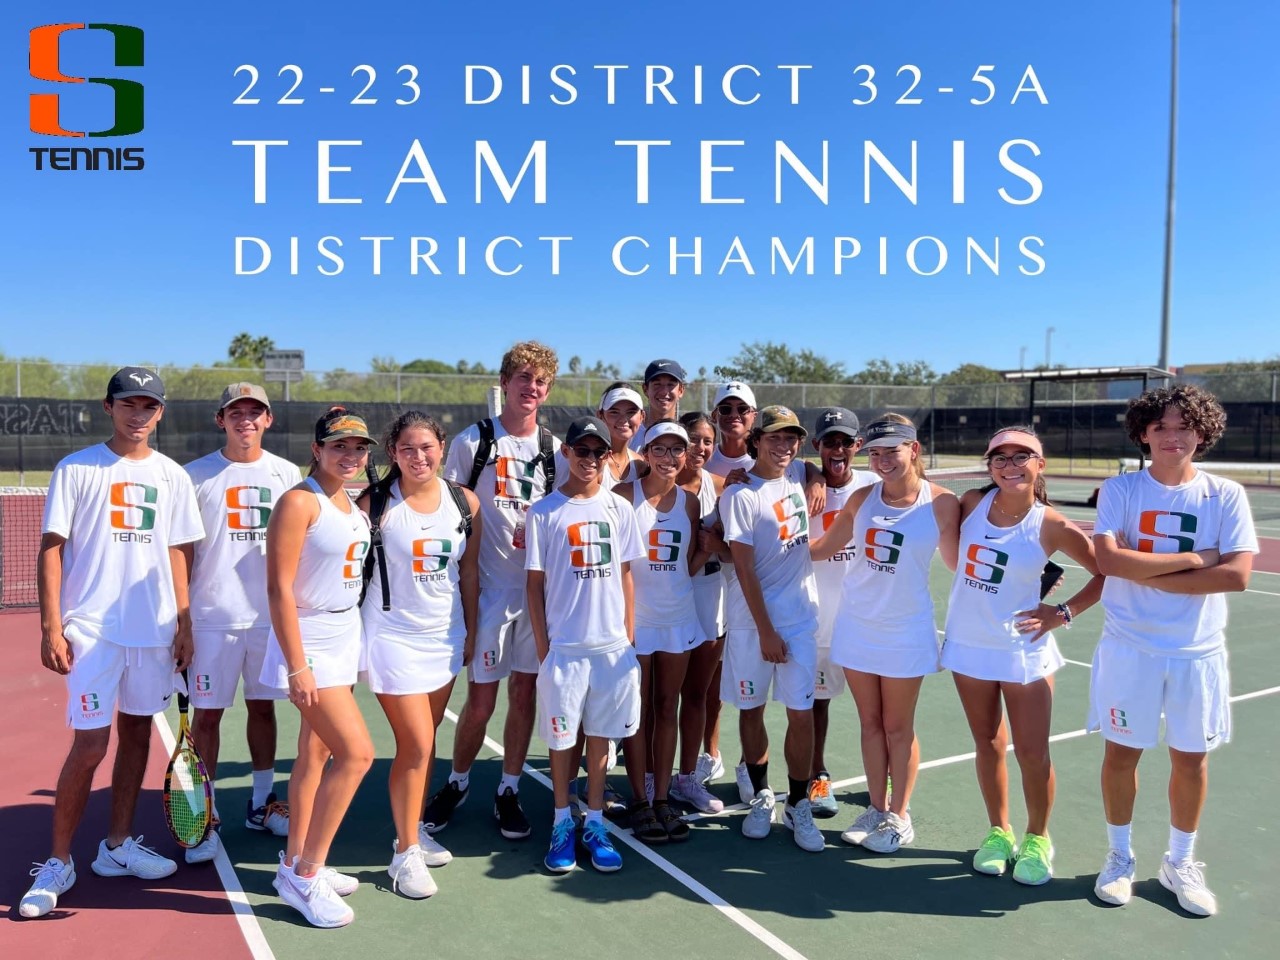 Hawk tennis team wins 32-5A District Championship